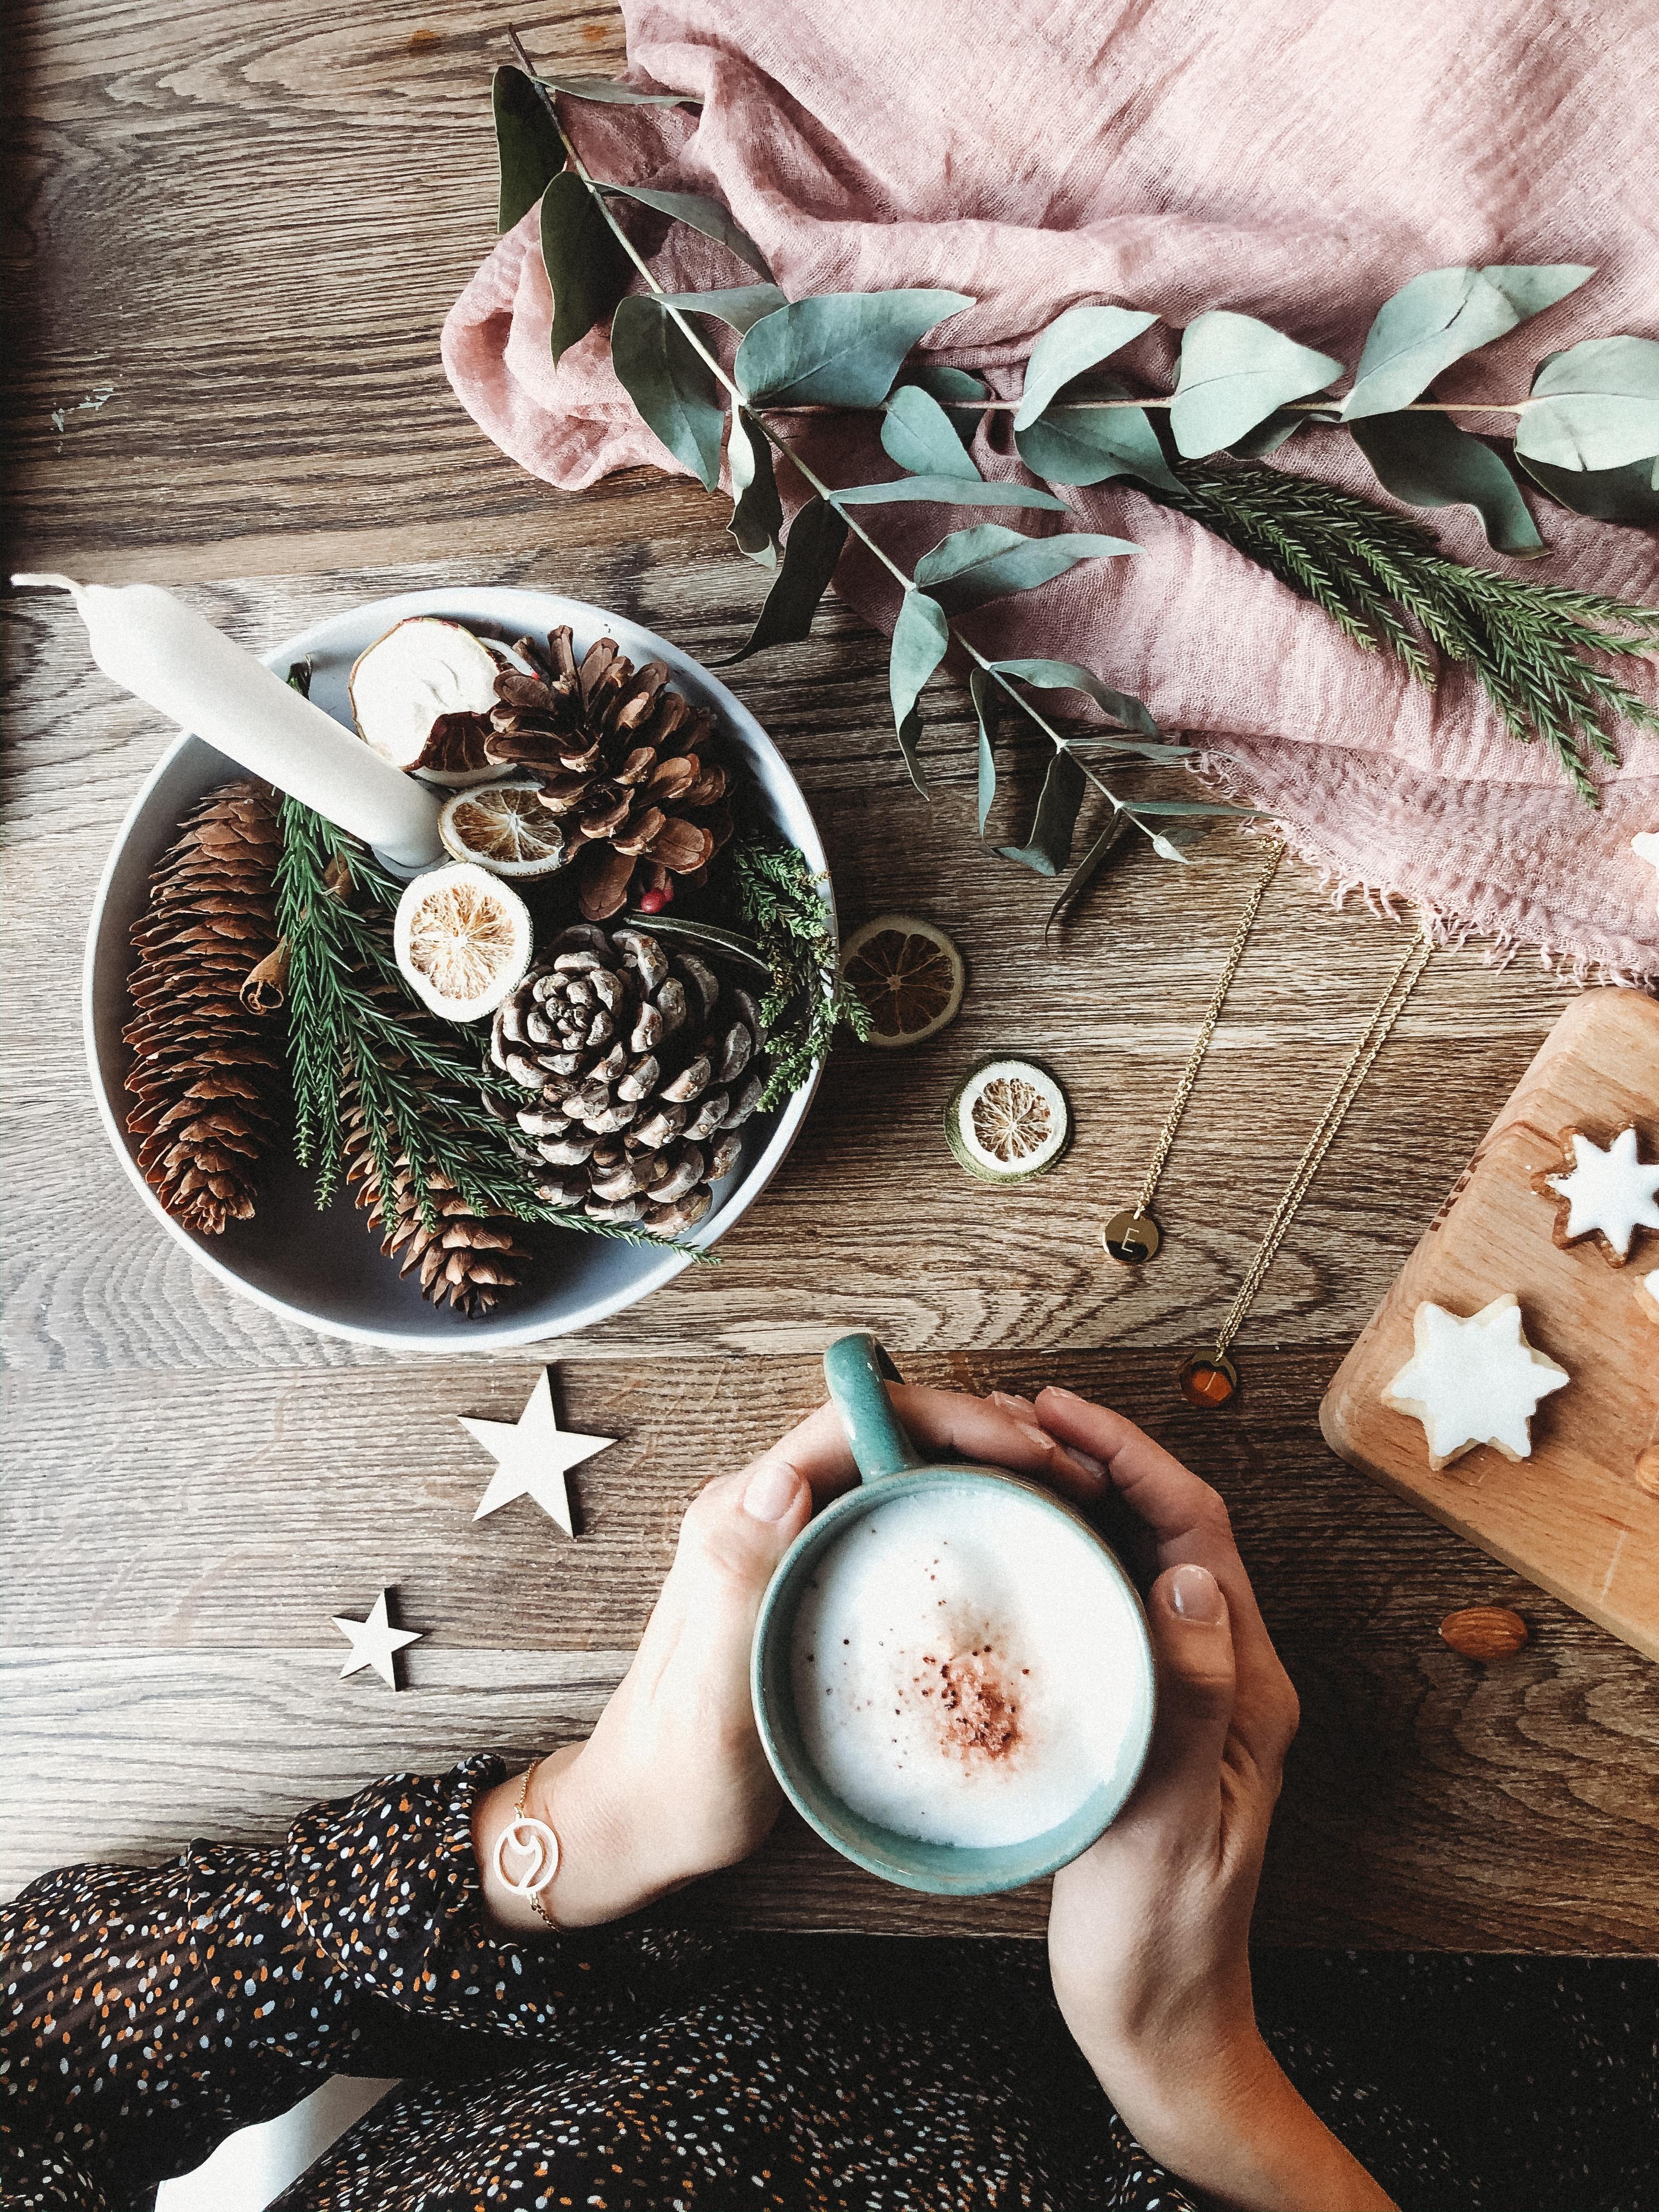 Die Ruhe vor dem Sturm ⭐️
#kaffeeliebe #christmasflatlay